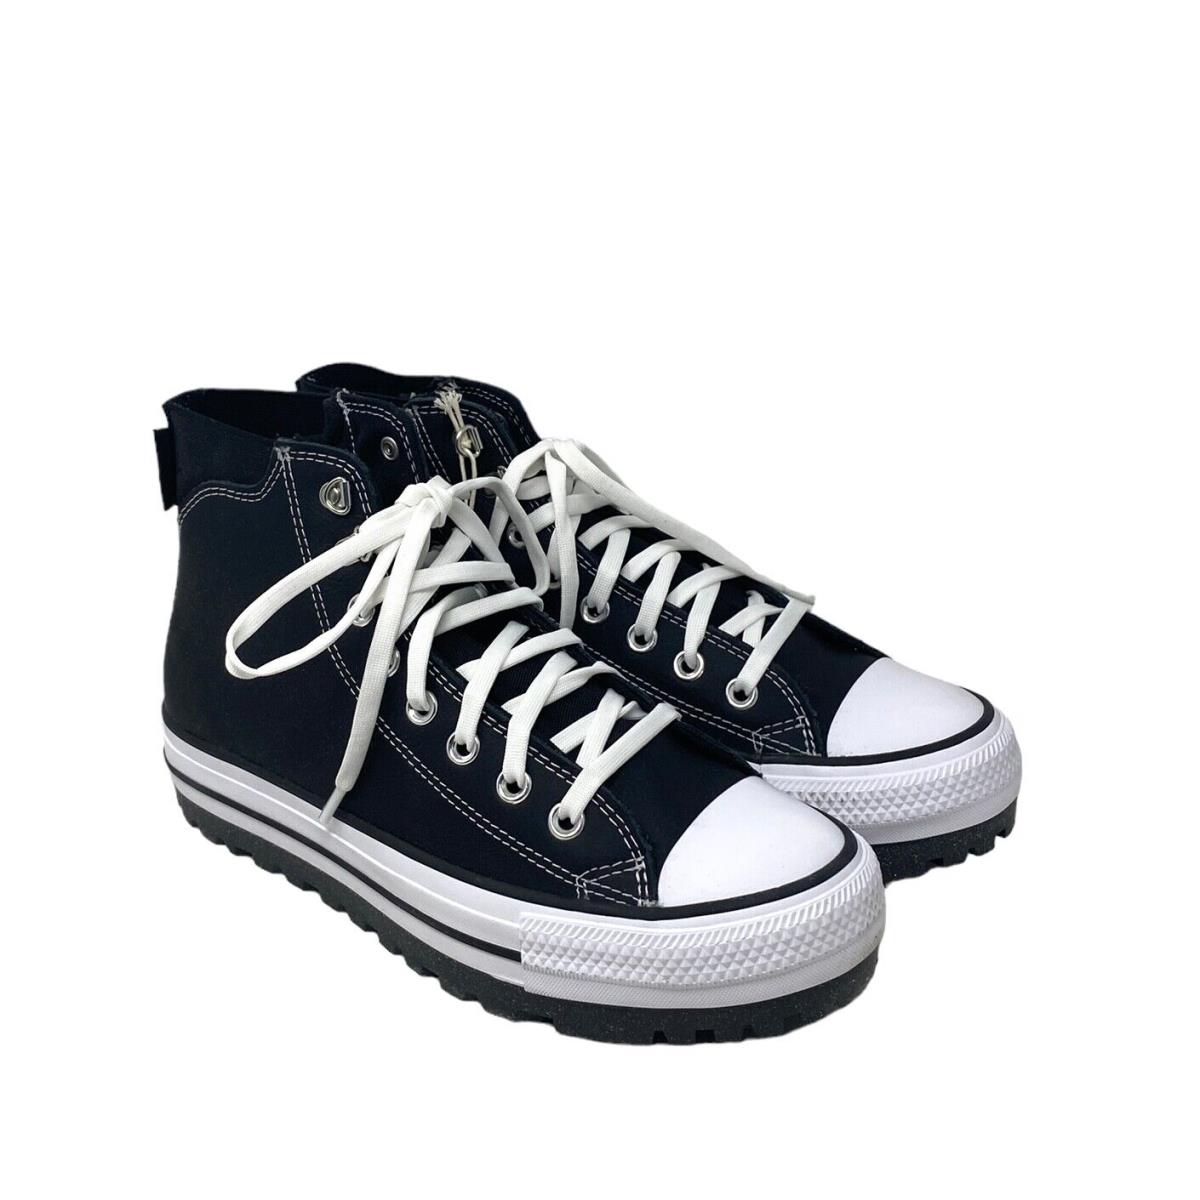 Converse Chuck Taylor City Trek Black Women Shoes High Top Skate Leather A04480C